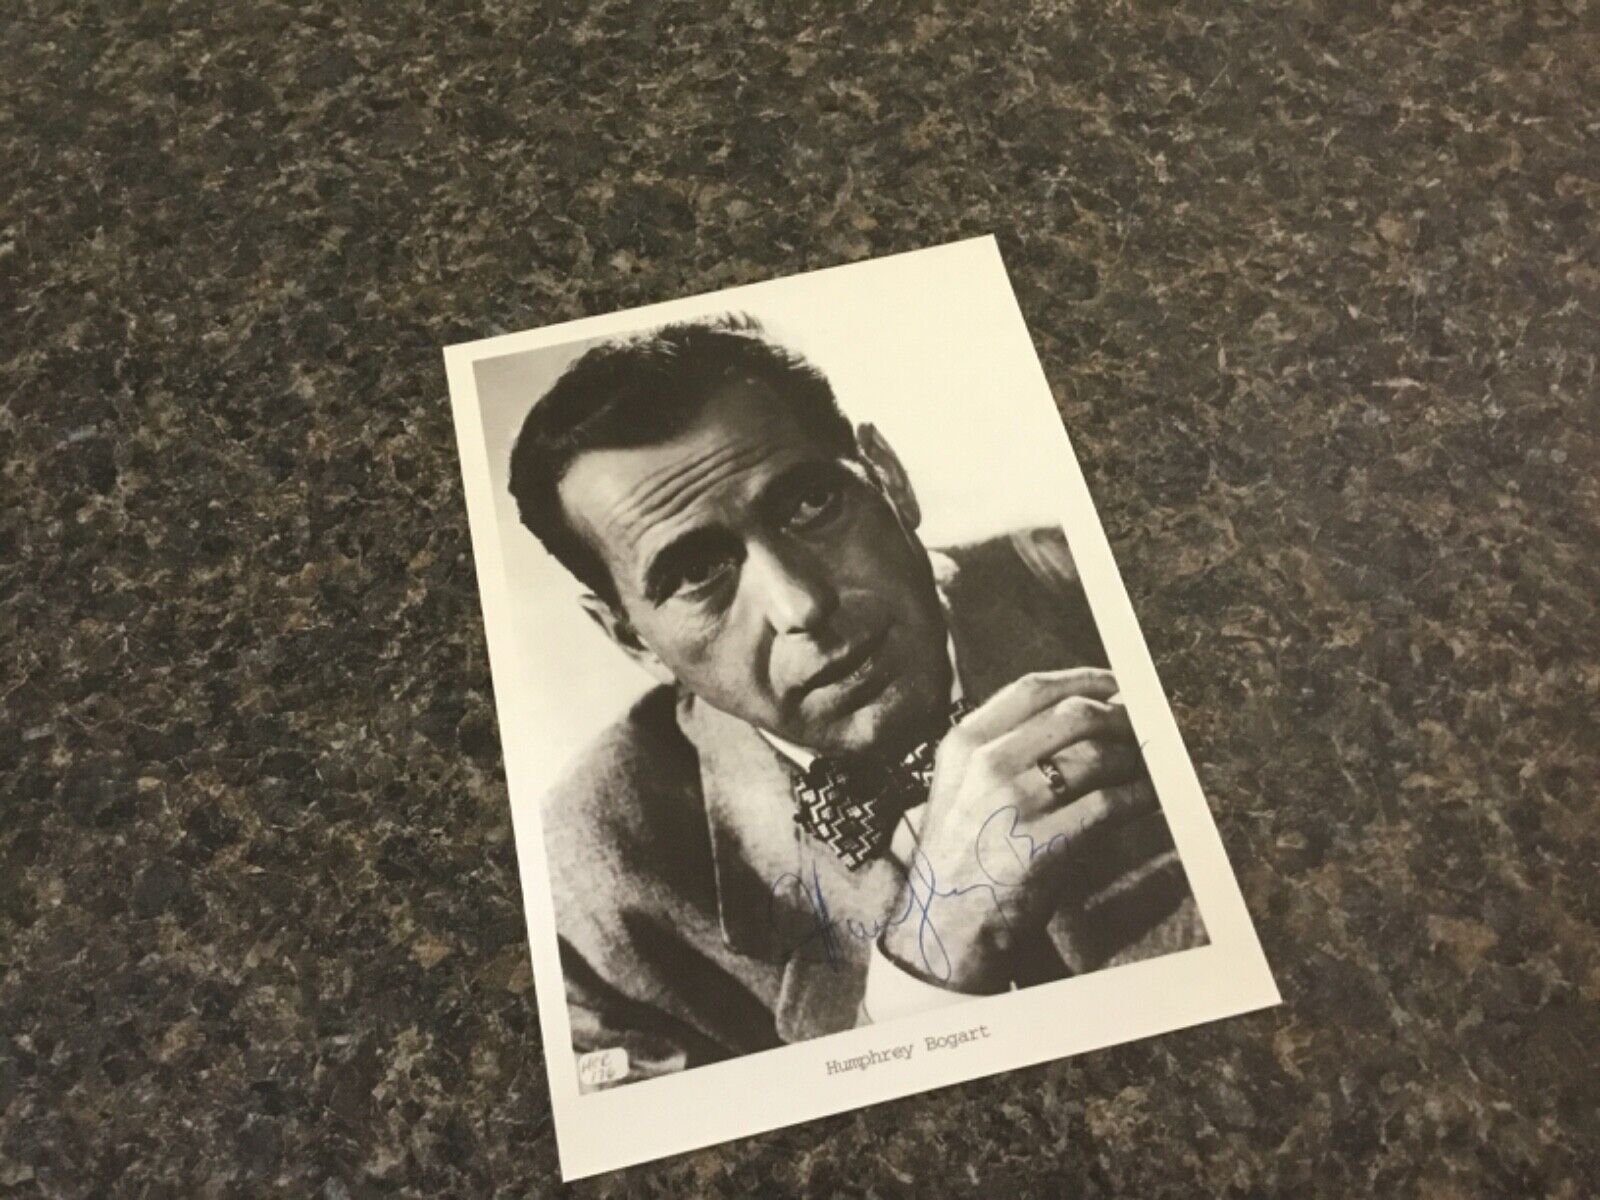 Humphrey Bogart hand signed black and white photograph print 5 x 7